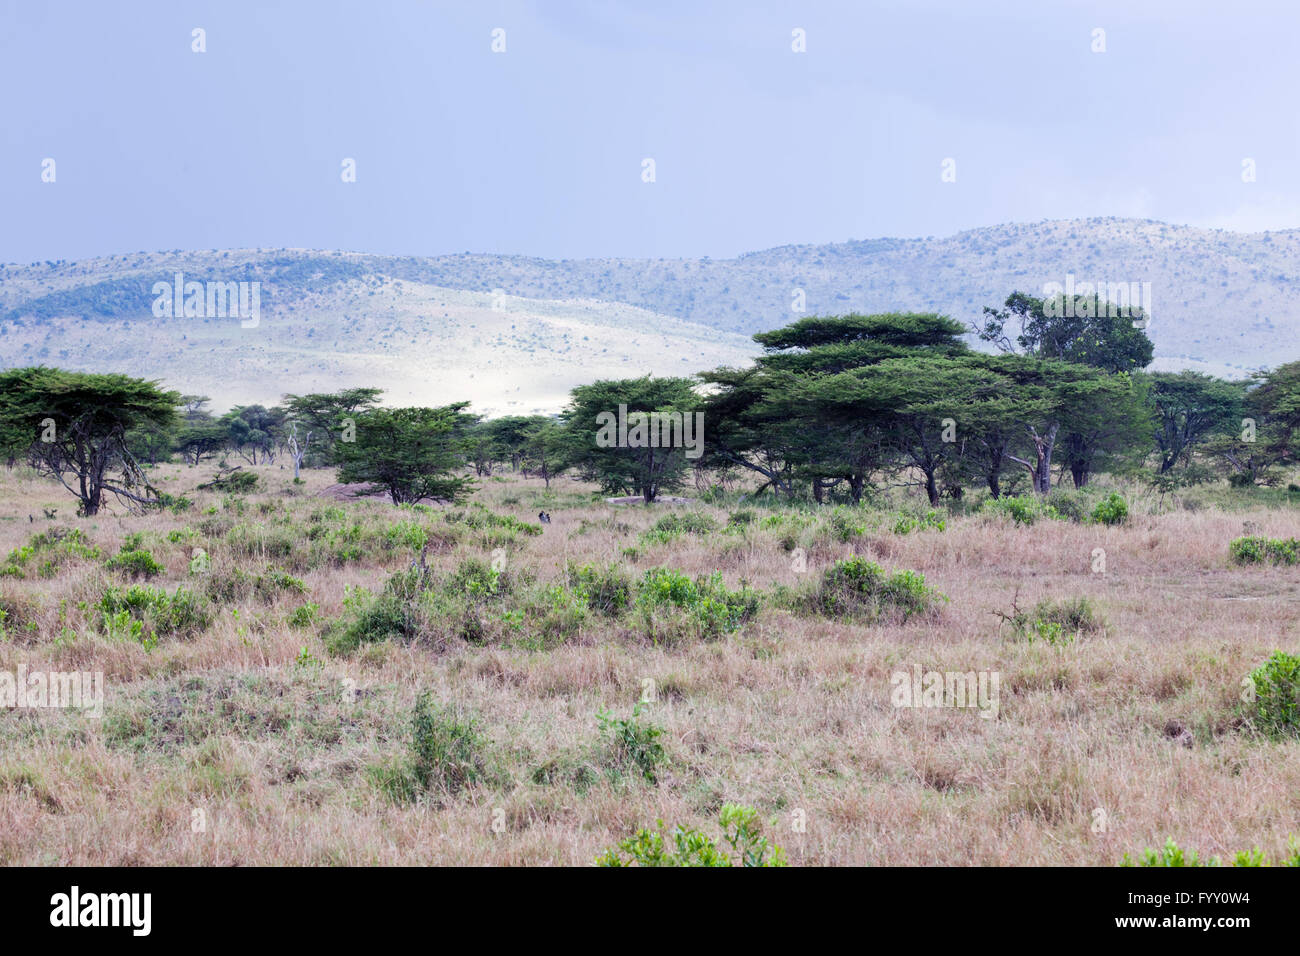 Savanna plain landscape in Africa Stock Photo